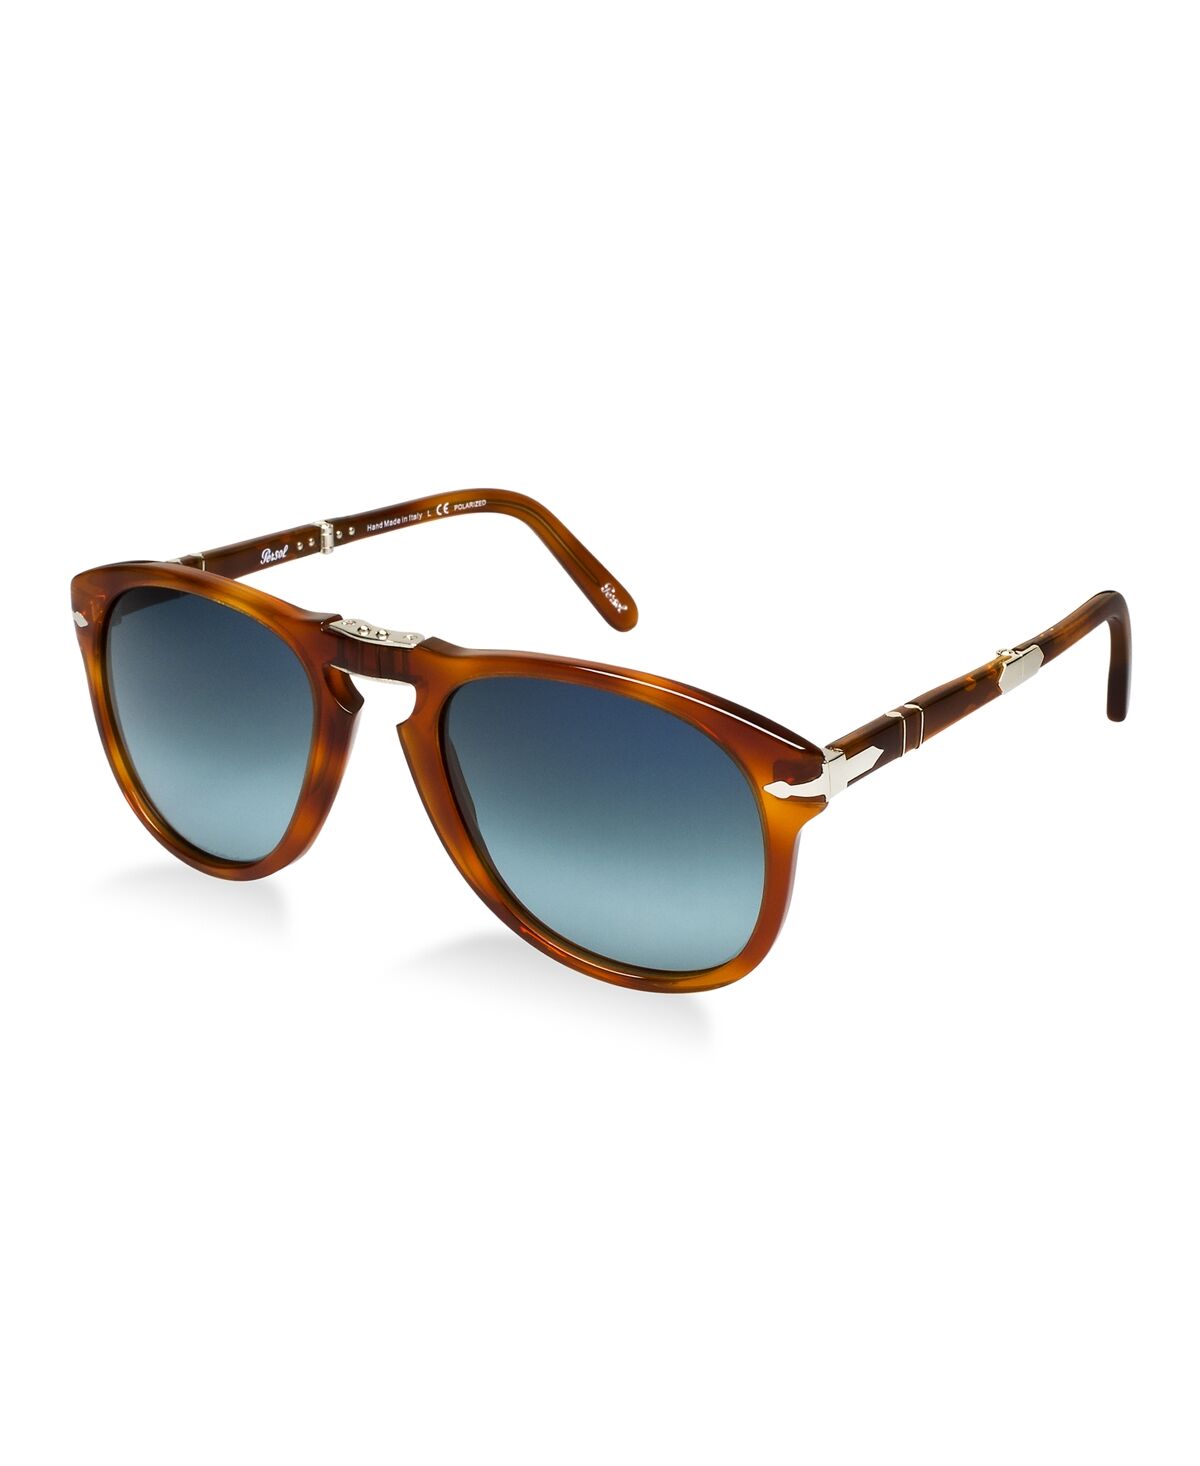 Persol Polarized Sunglasses, PO0714SM Steve Mcqueen Limited Edition - TORTOISE LIGHT/BLUE POLAR